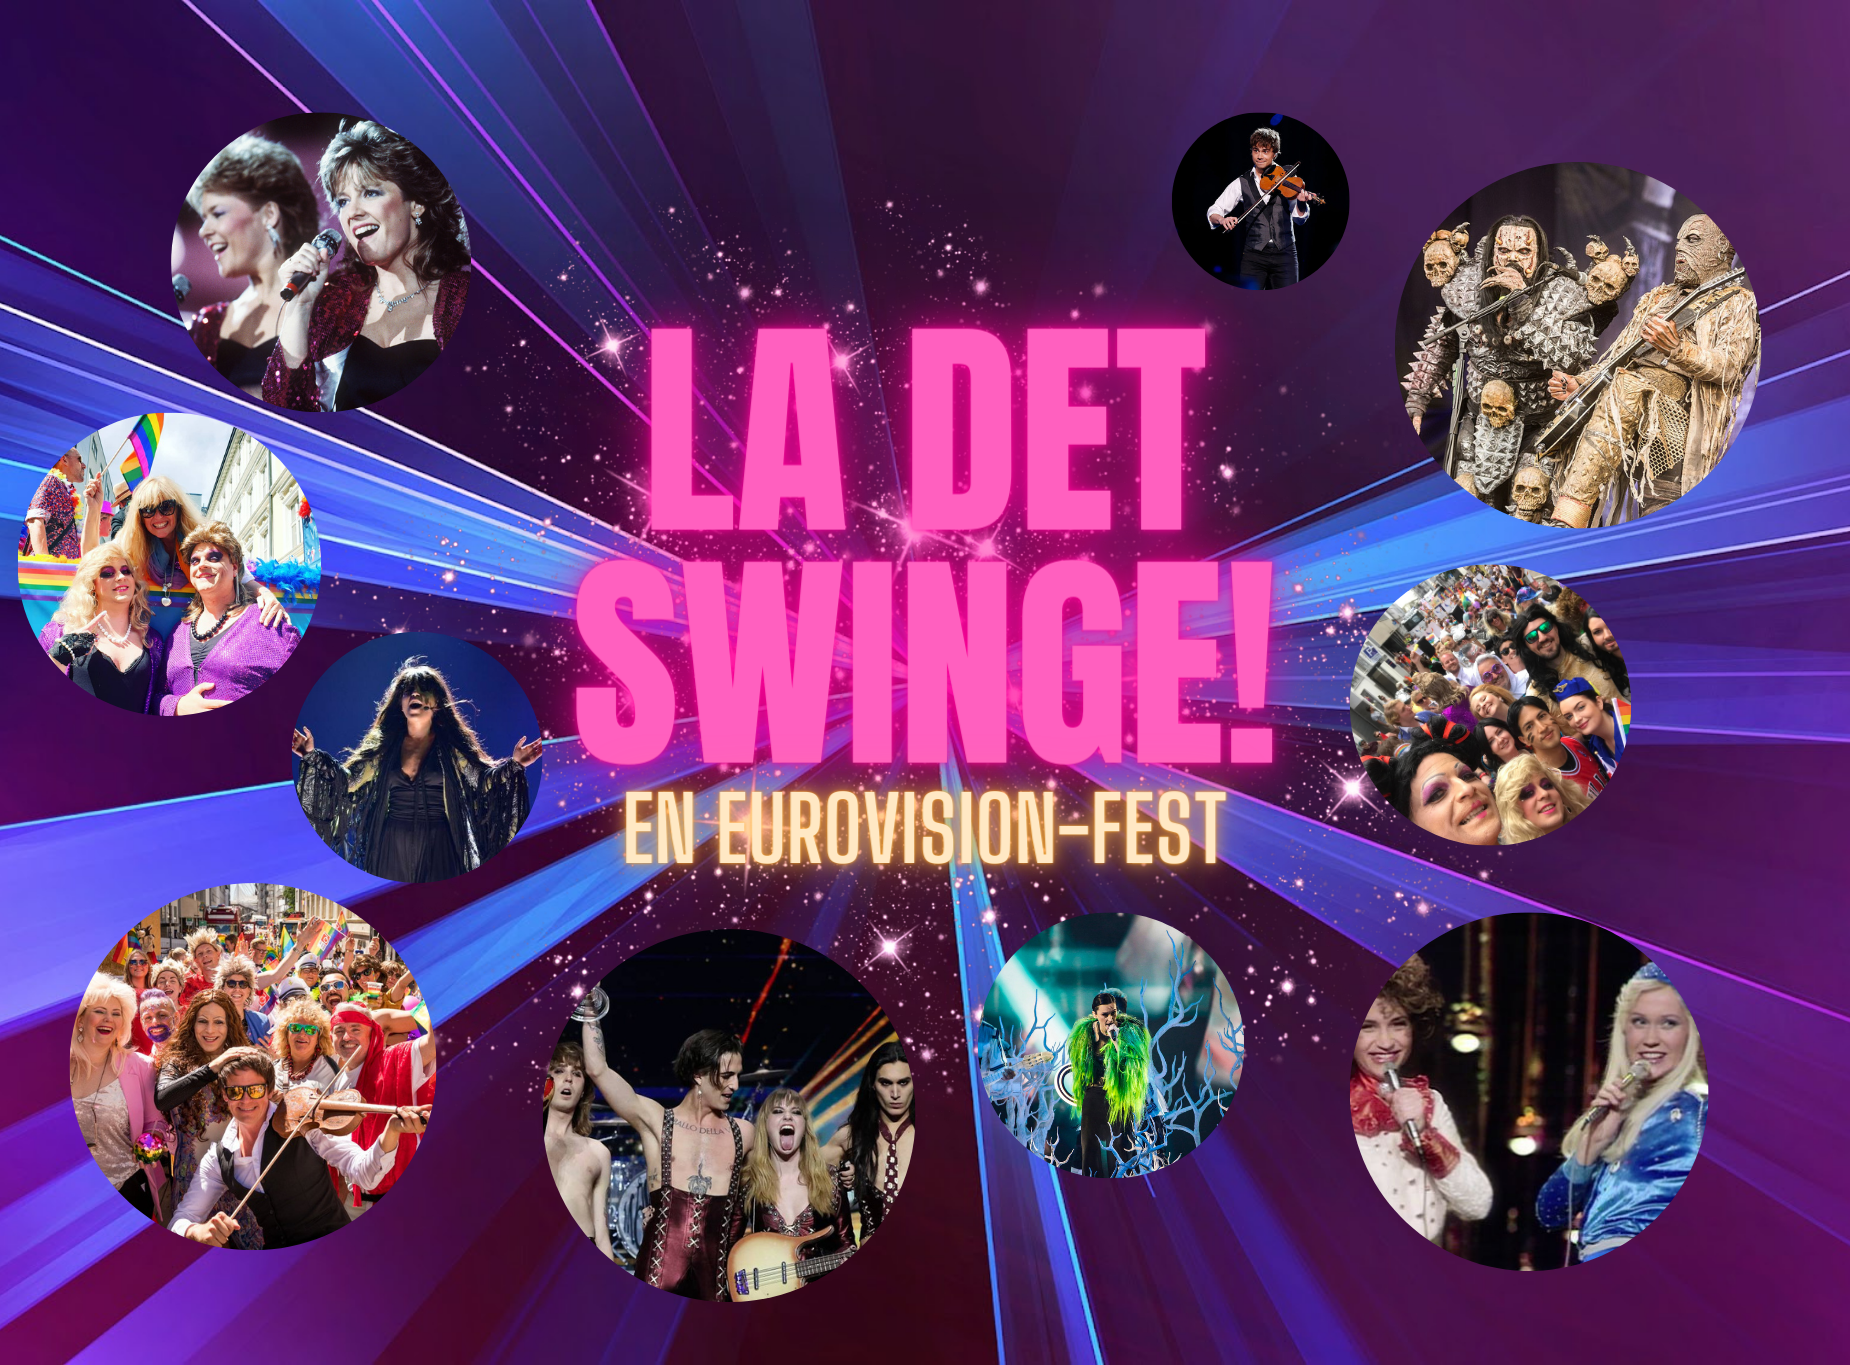 La det Swinge! En Eurovision-fest presale information on freepresalepasswords.com